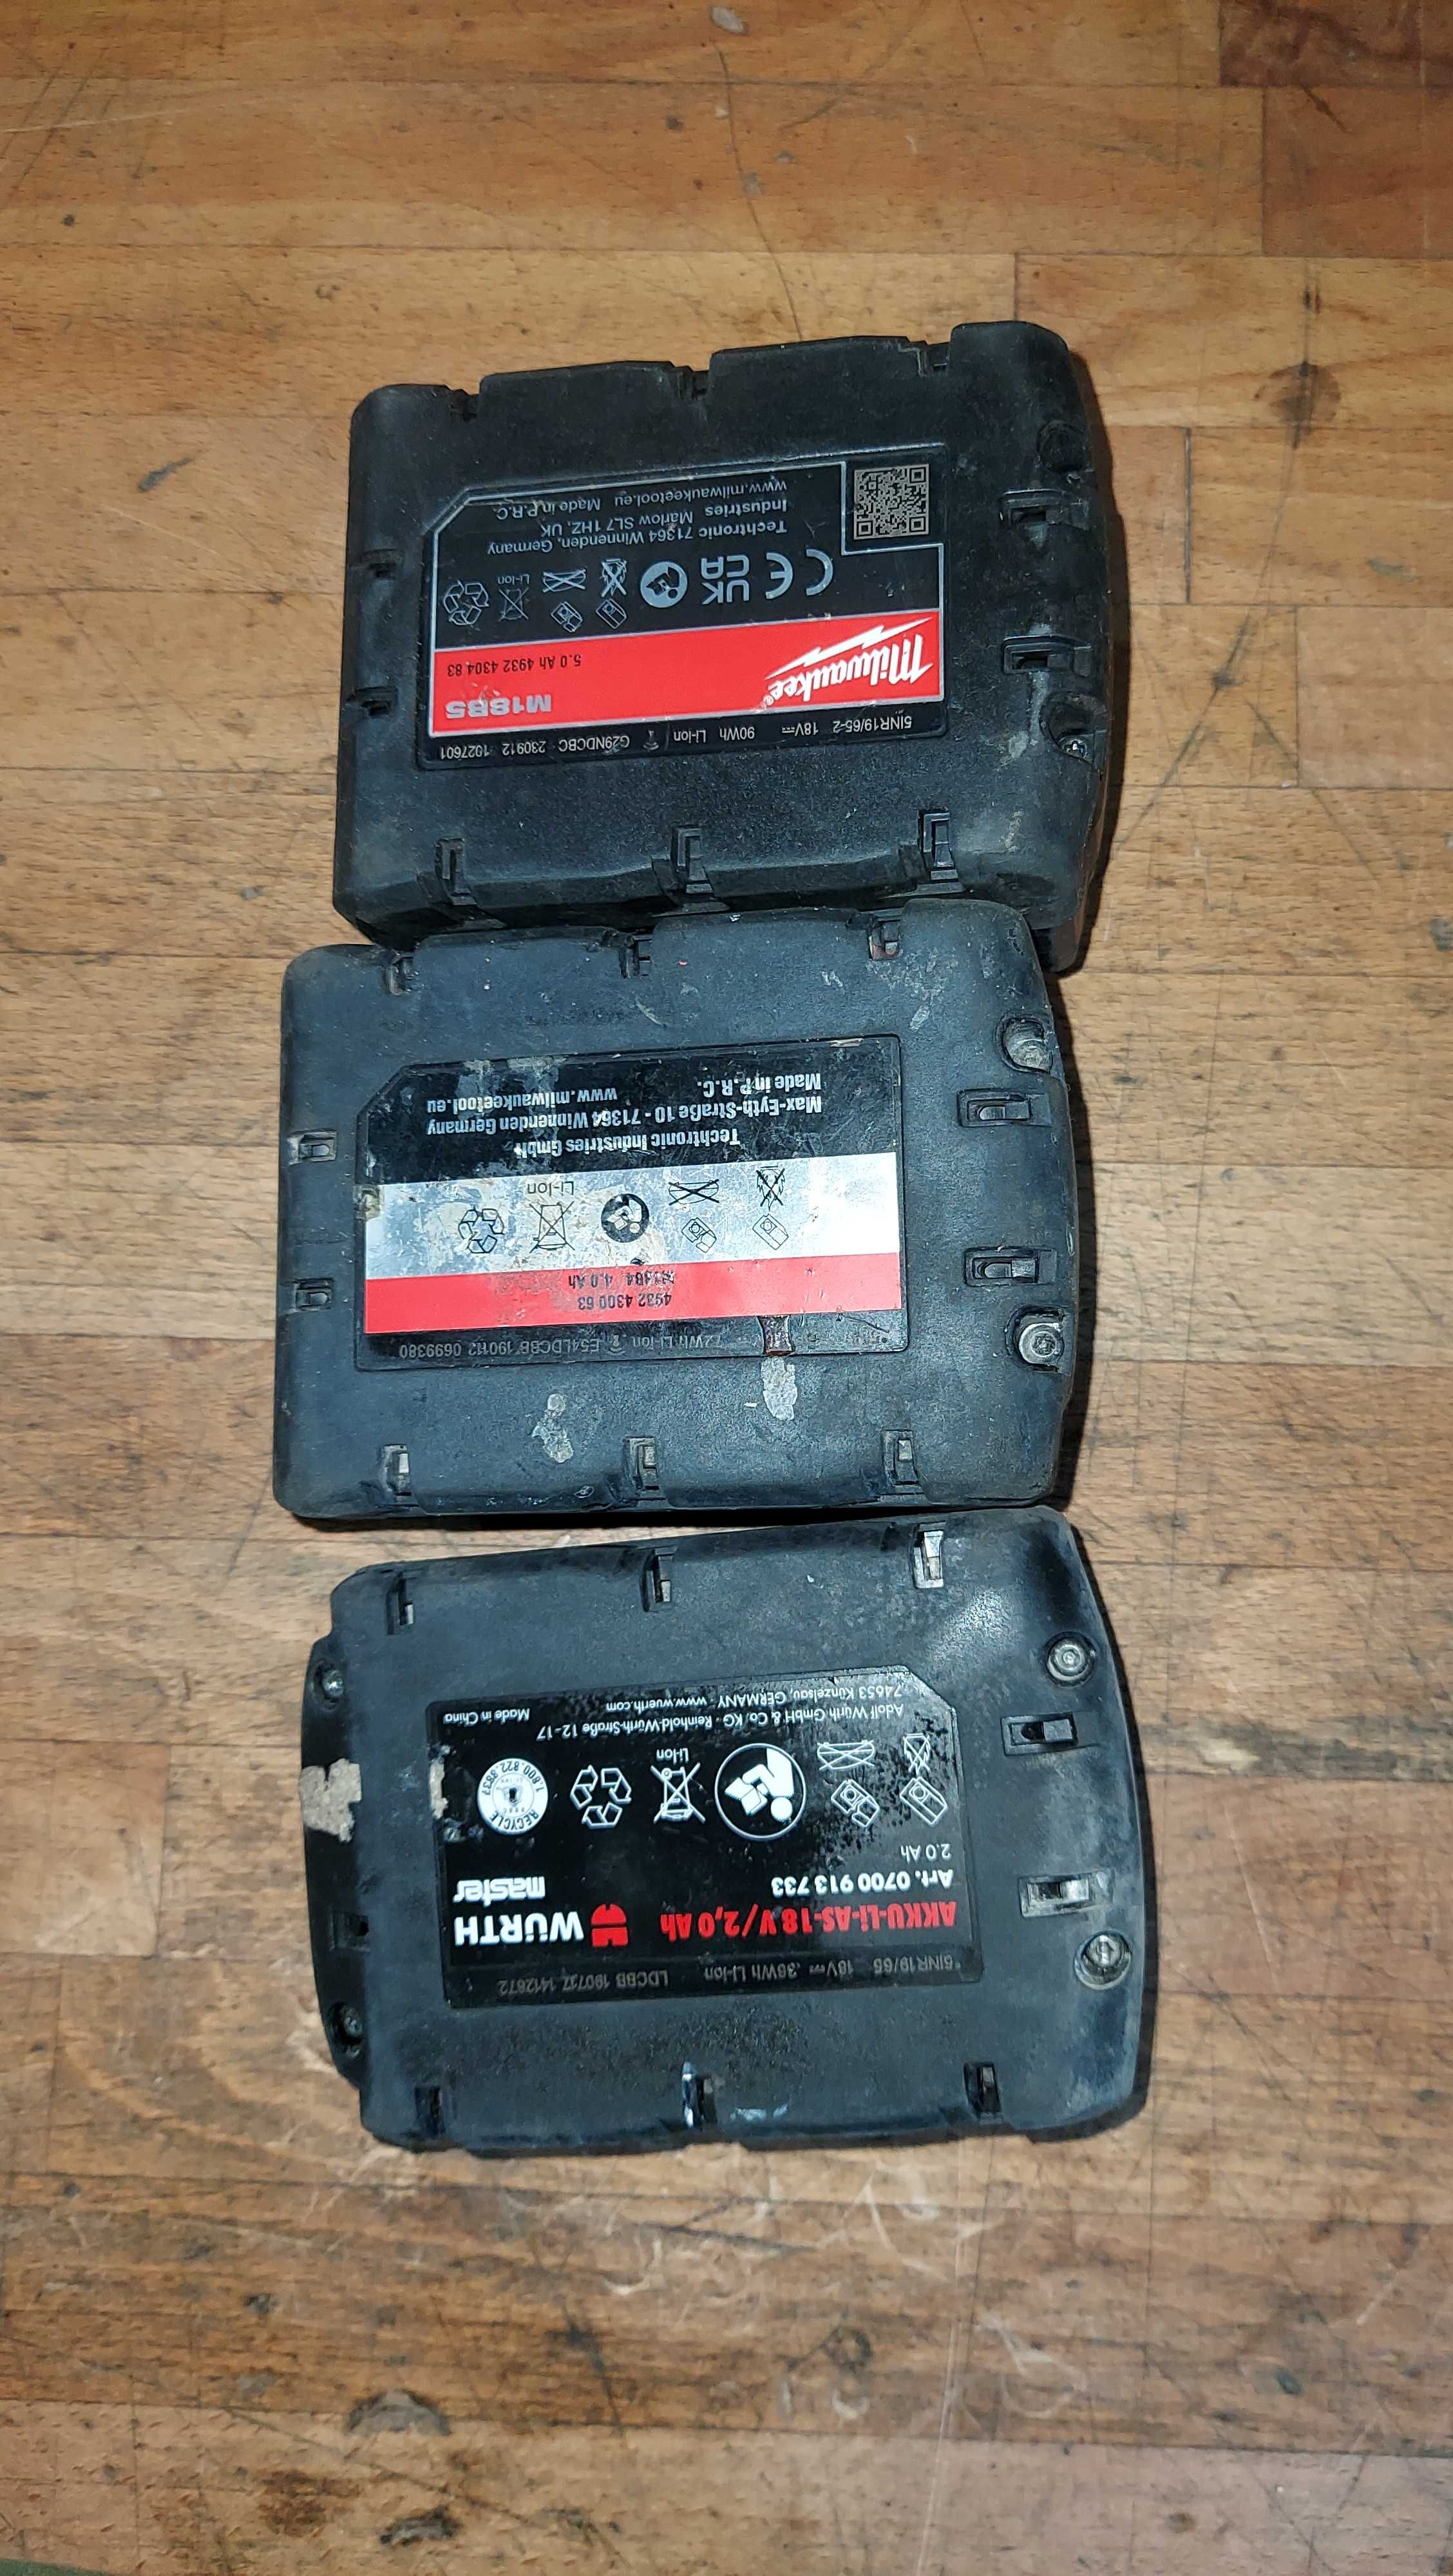 Acumulator baterie Milwaukee M18 2 4 5 ah